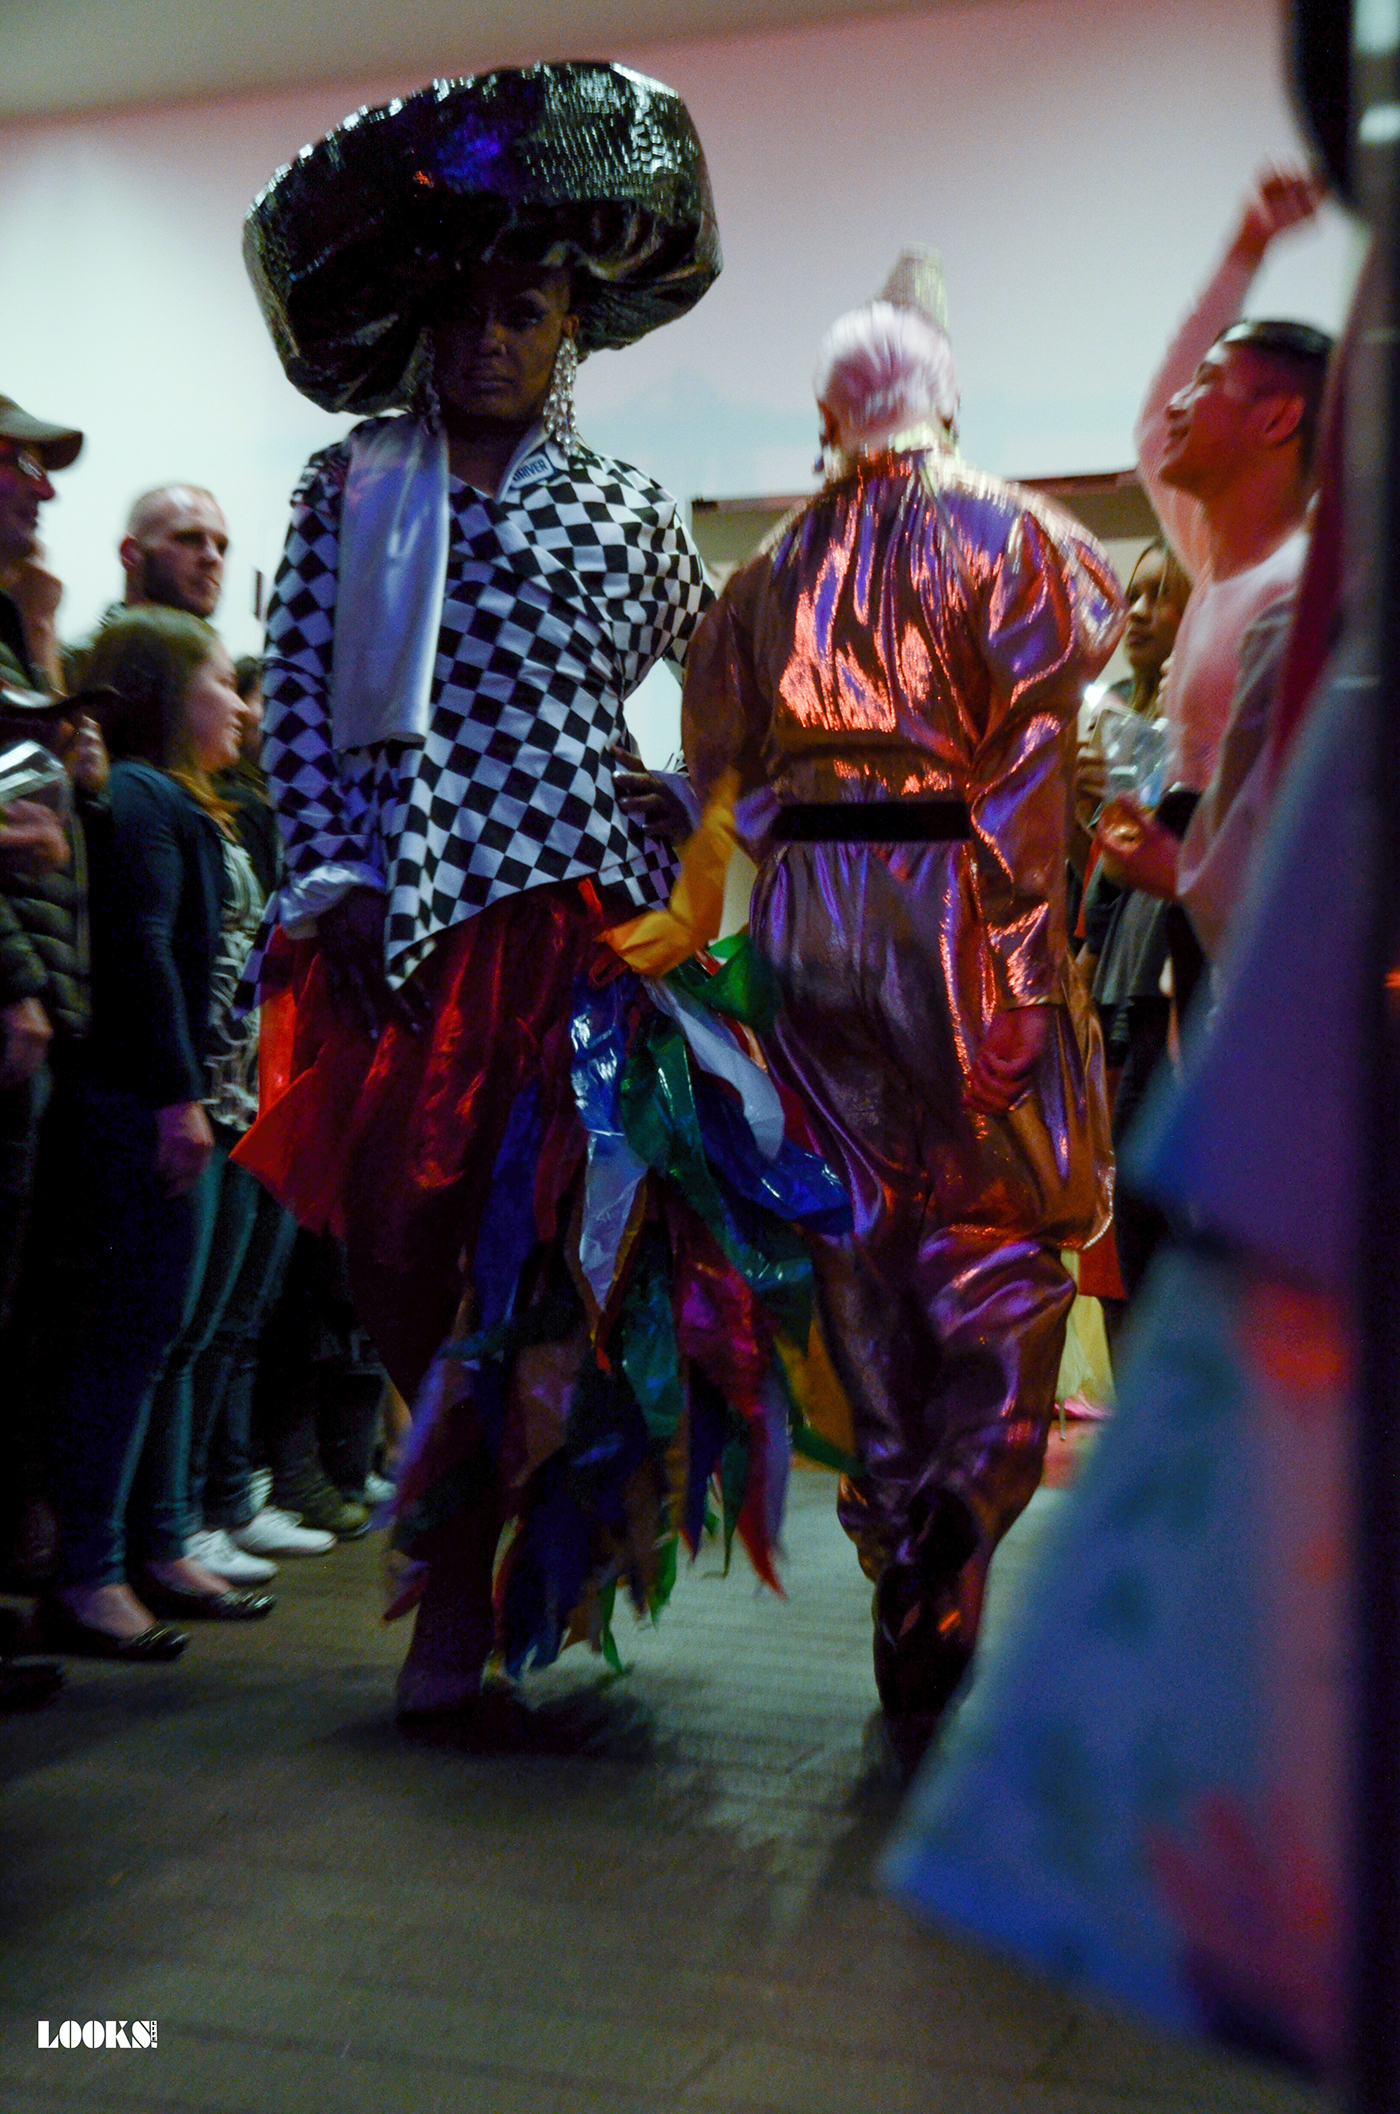 Fashion  Photography  runway juanita more Mr. David De Young Museum costume queer Drag modeling